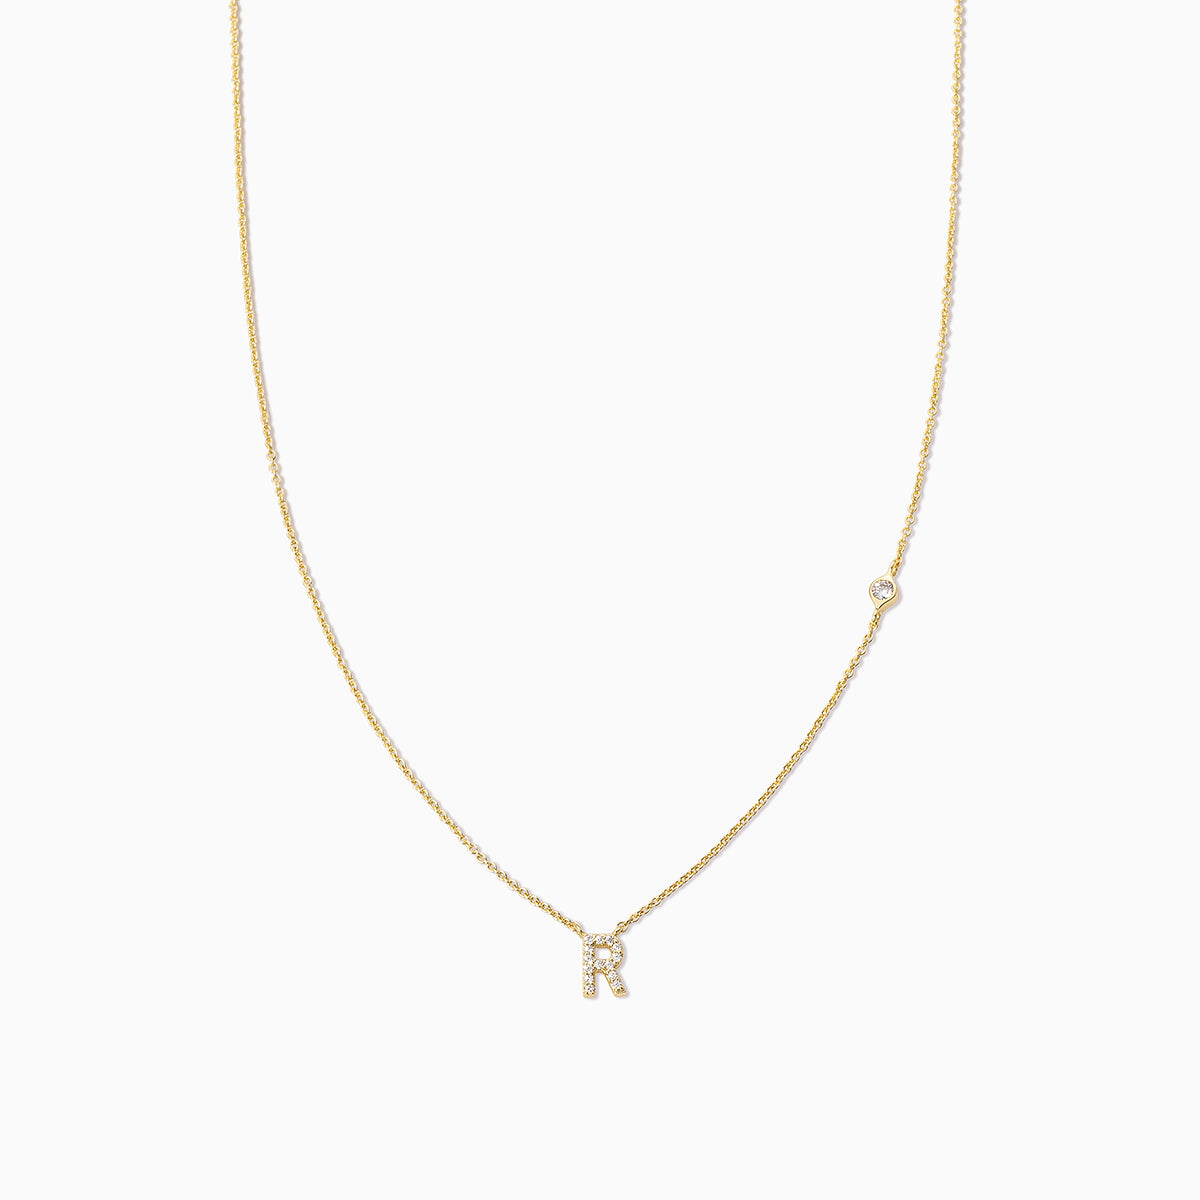 Pavé Initial Necklace | Gold R | Product Image | Uncommon James